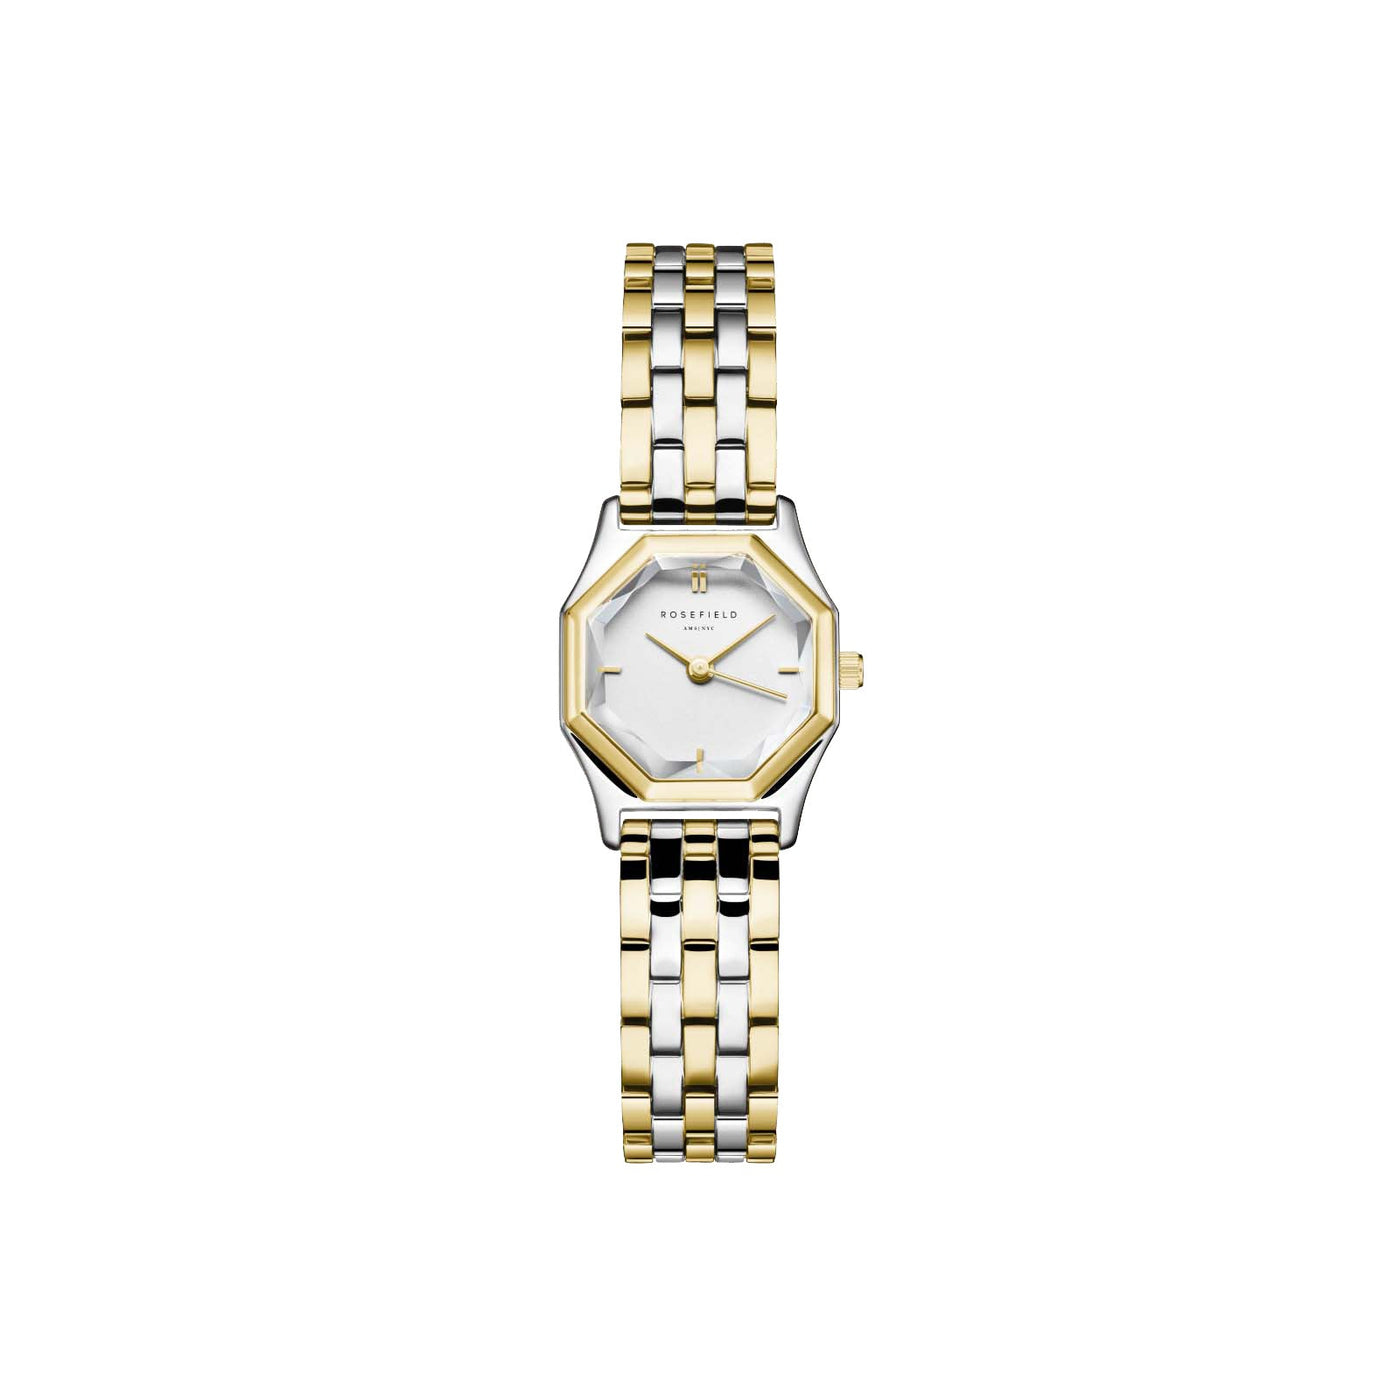 Rosefield (โรสฟิลด์) นาฬิกาผู้หญิง รุ่น Gemme หน้าปัด 21.5 x 27.5 มม.